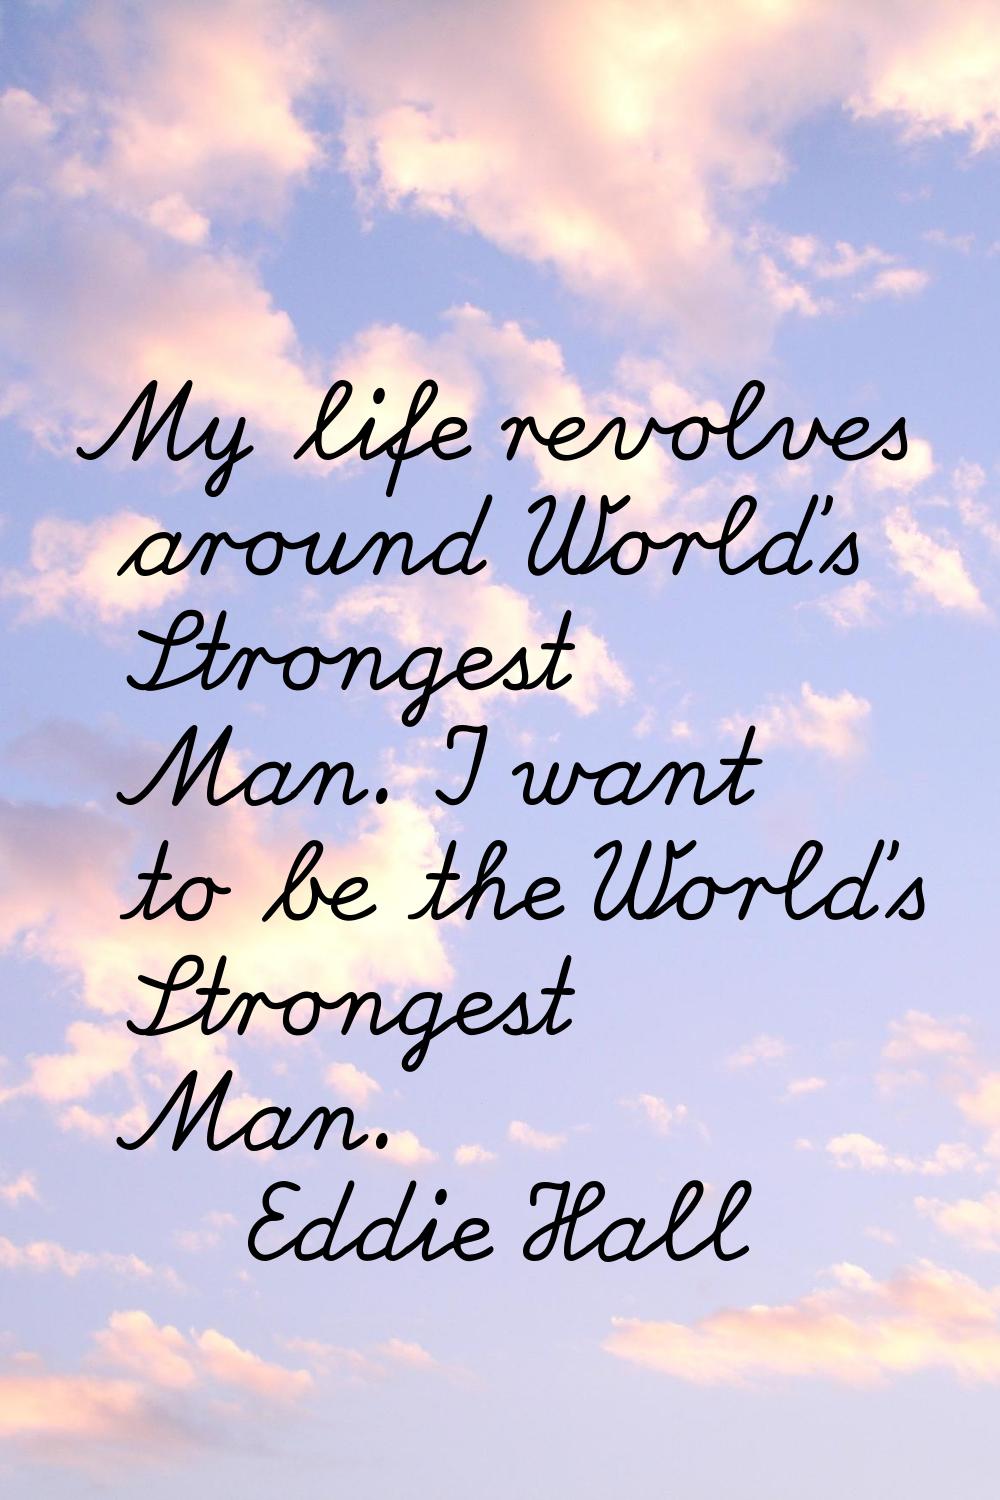 My life revolves around World's Strongest Man. I want to be the World's Strongest Man.